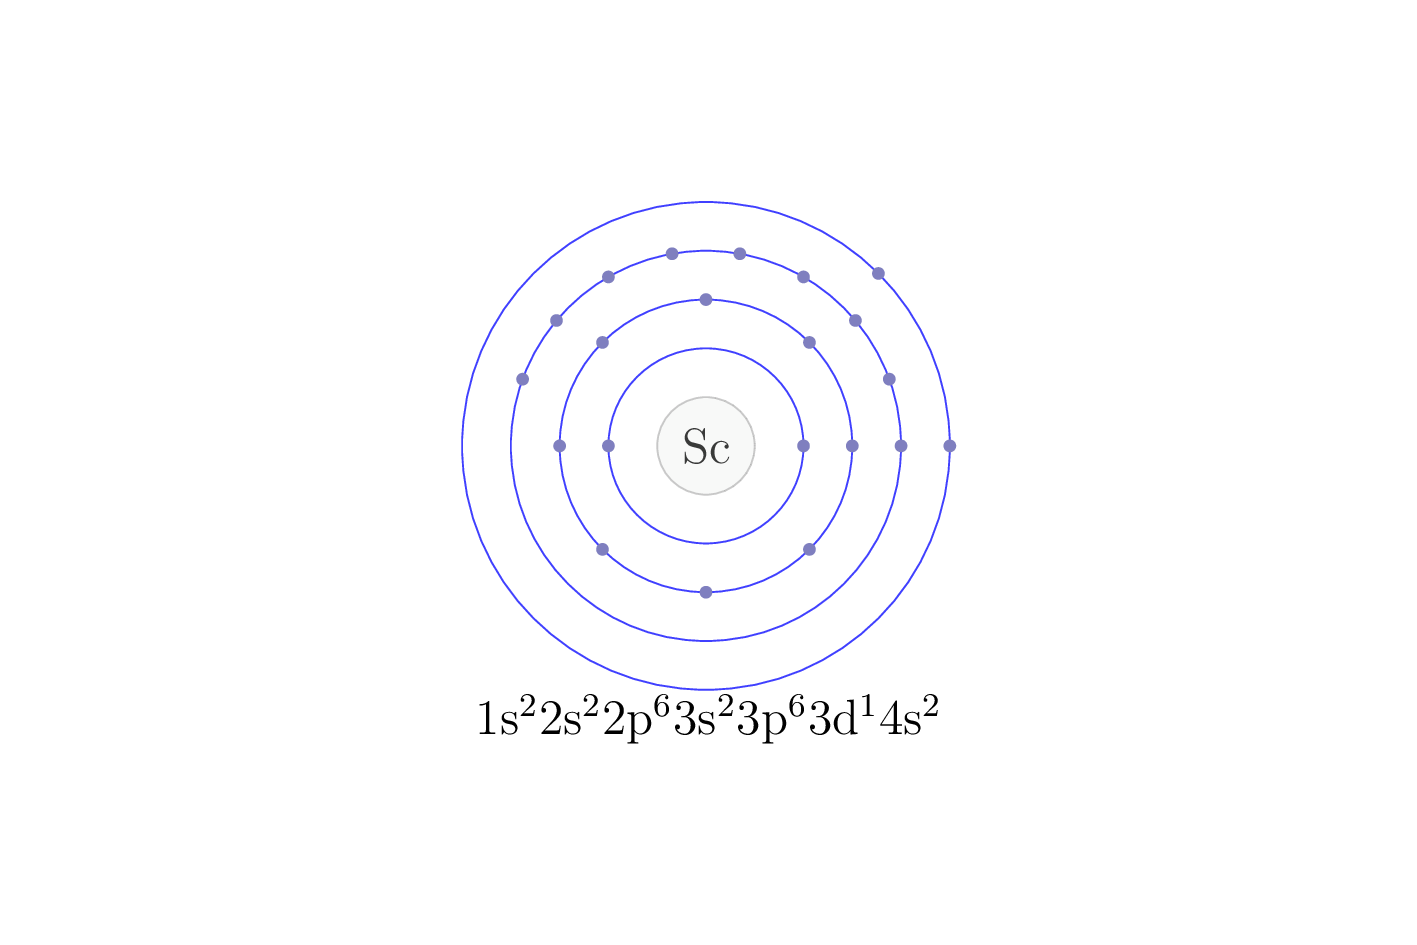 electron configuration of element Sc